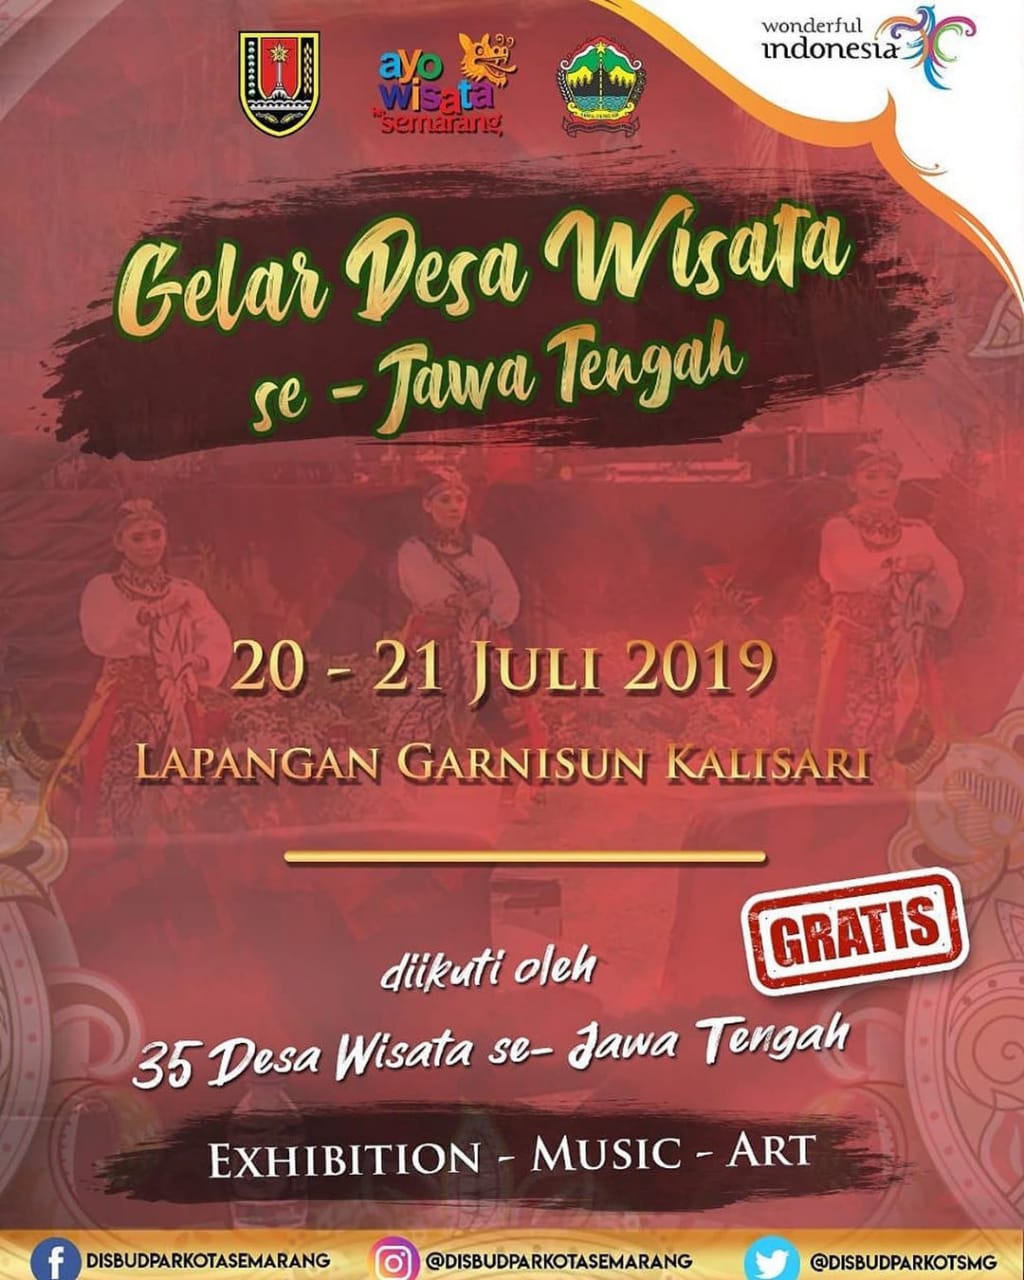 EVENTS SEMARANG : GELAR DESA WISATA SE JAWA TENGAH